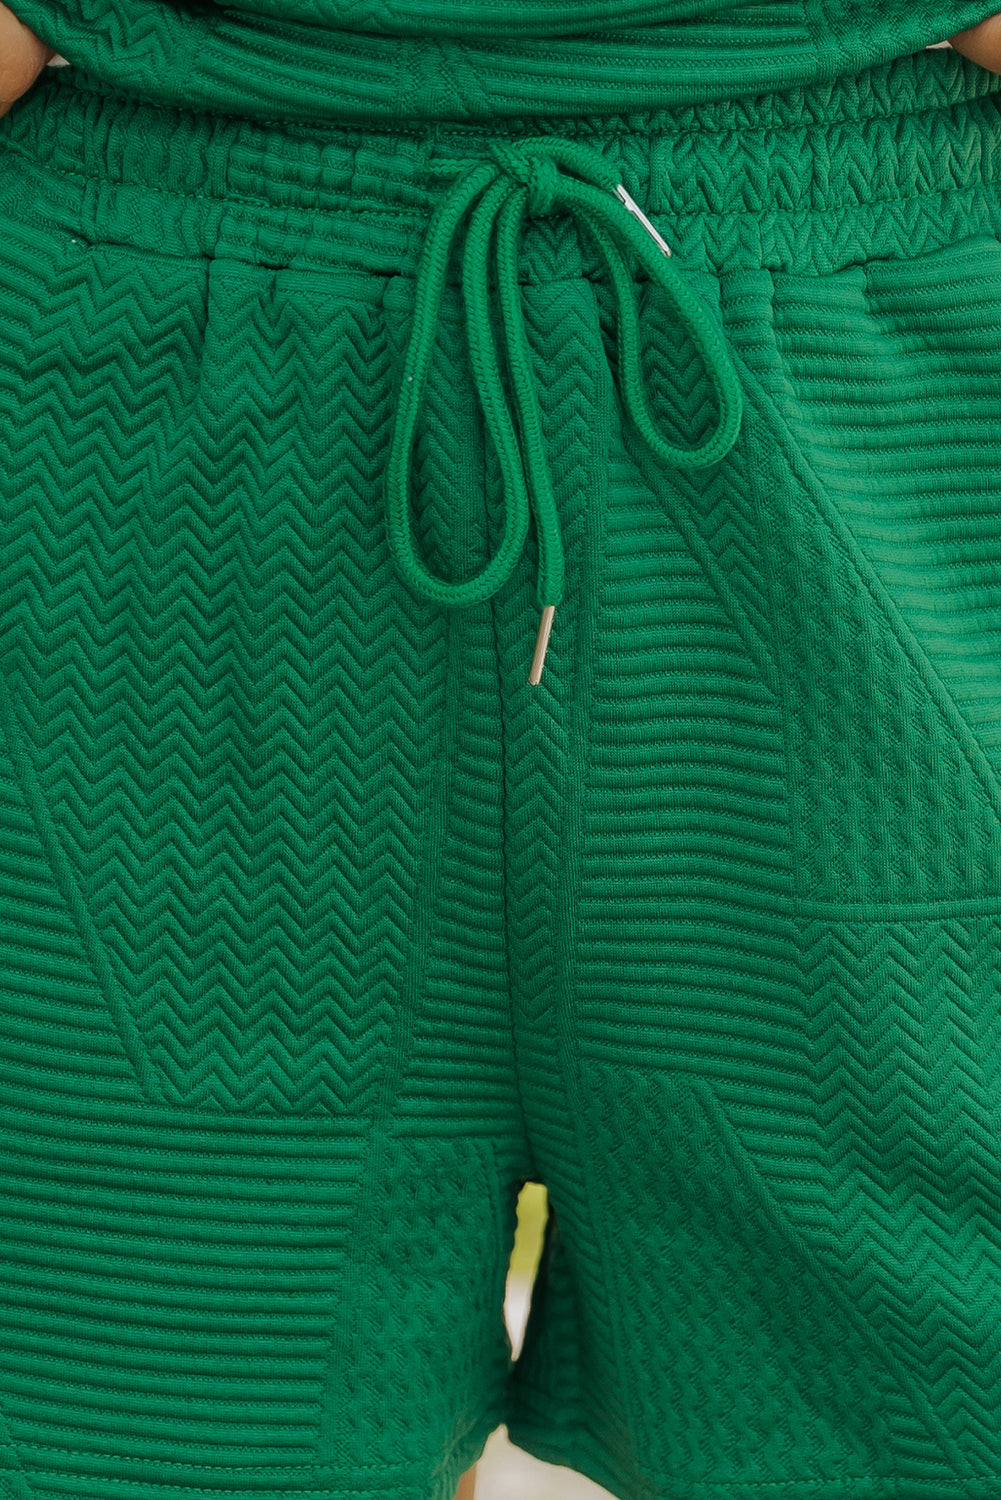 Skobeloff Textured Ruffle Split Top and Drawstring Shorts